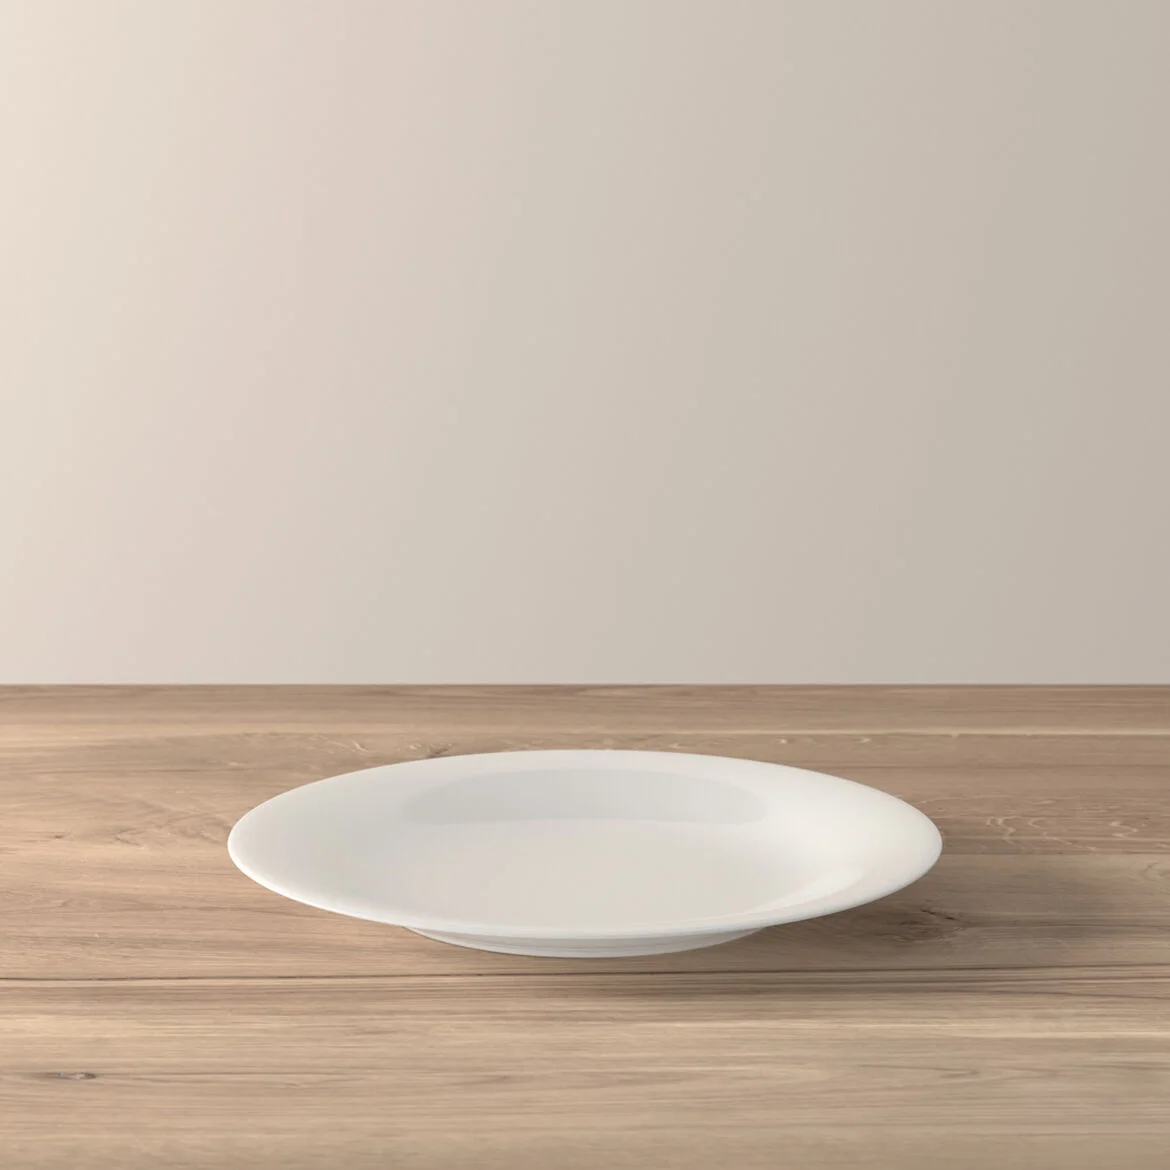 New Cottage Basic Салатная тарелка 21 см